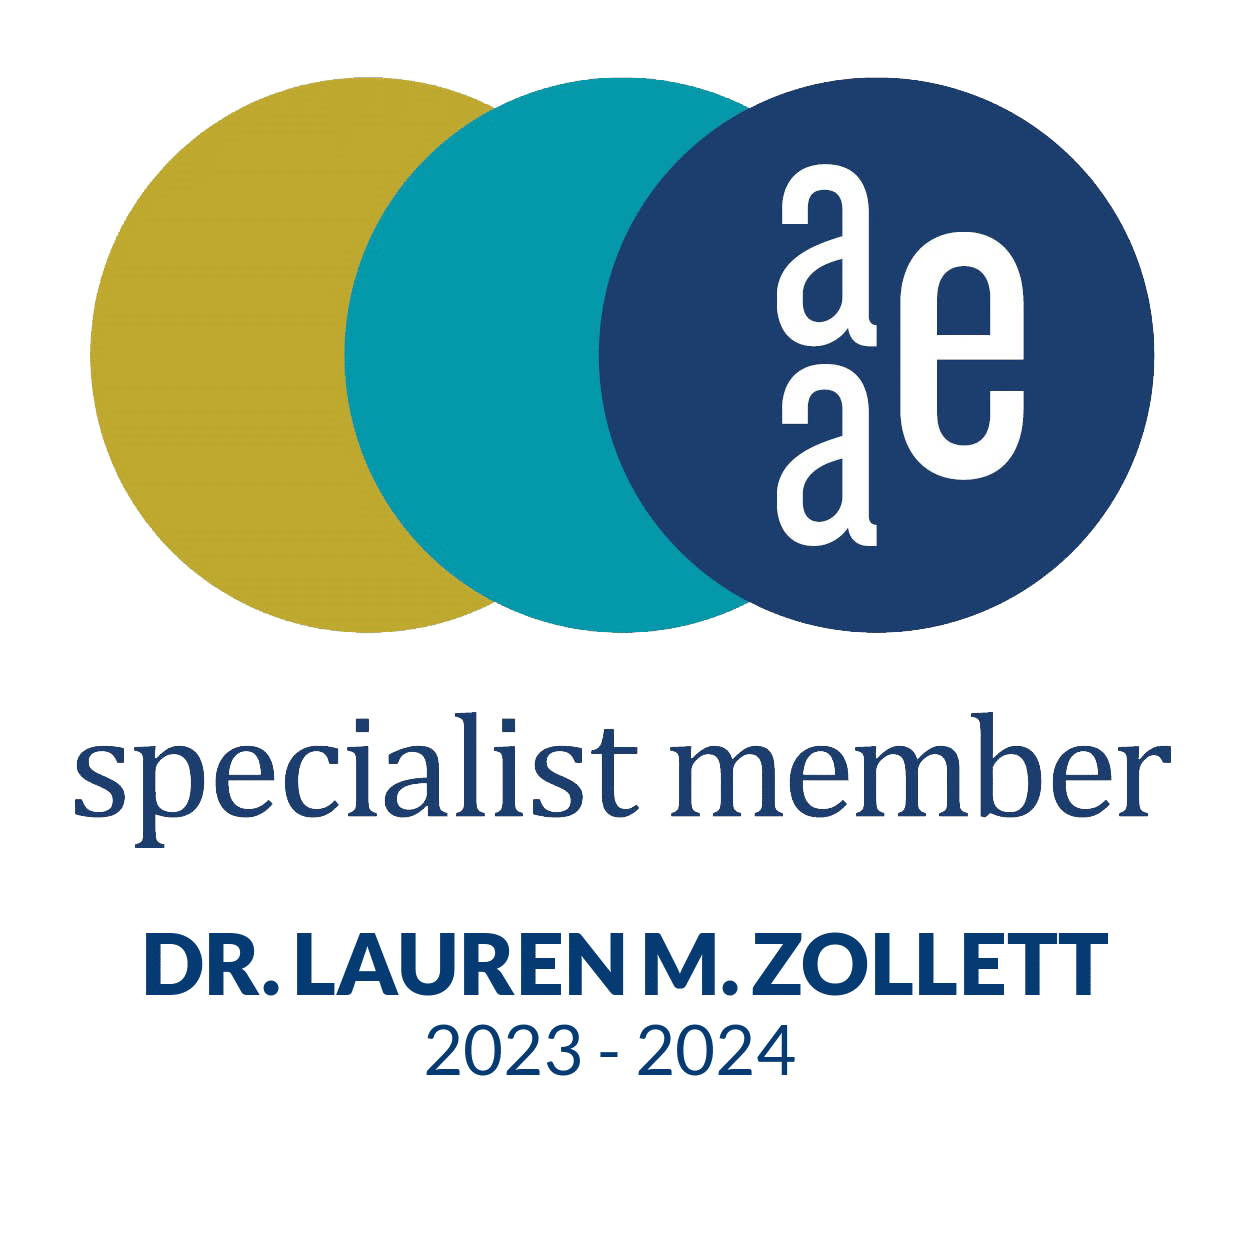 Dr. Lauren M. Zollett, Specialist Member of the American Association of Endodontics